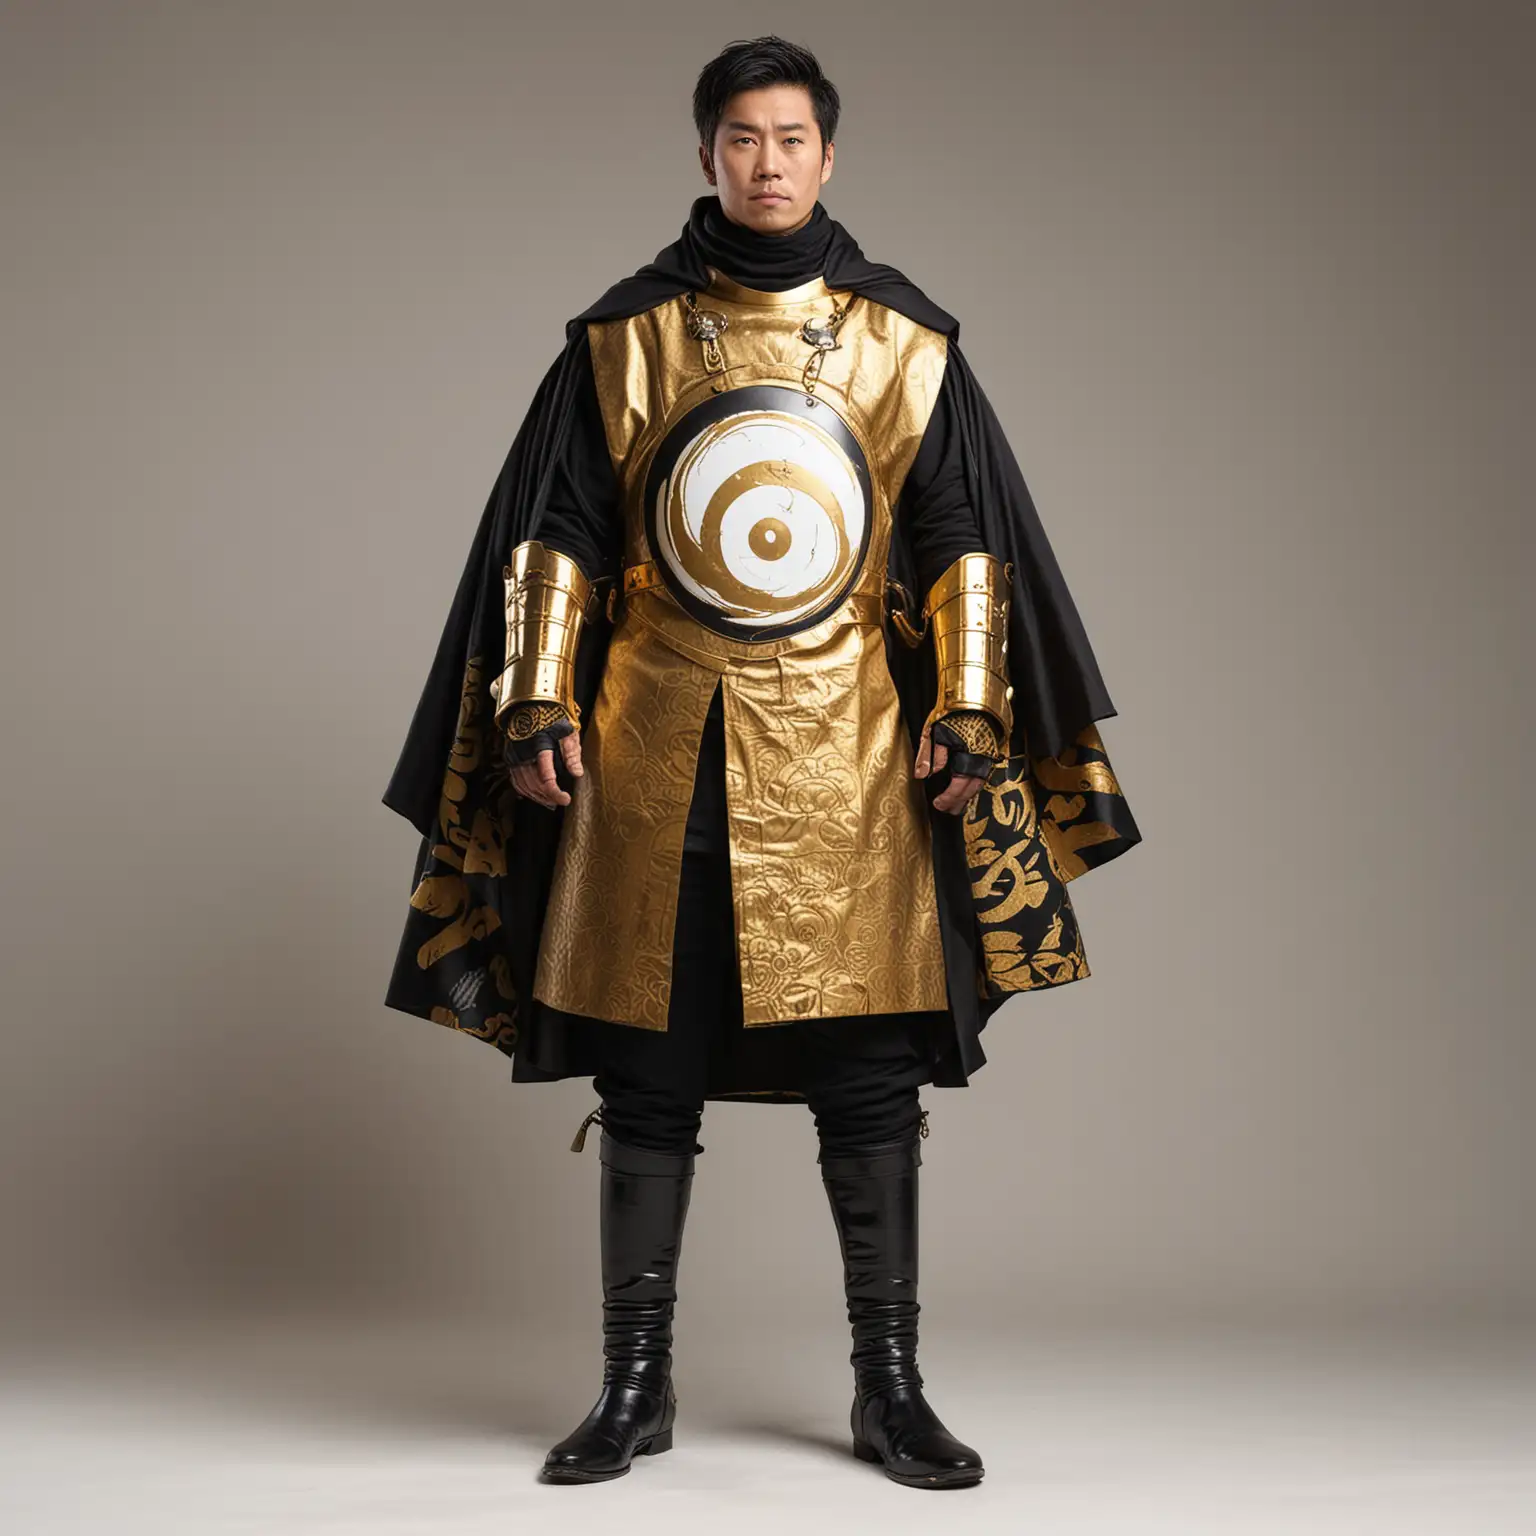 Heroic Japanese Samurai with Gold Knight Armor and YinYang Symbol Belt